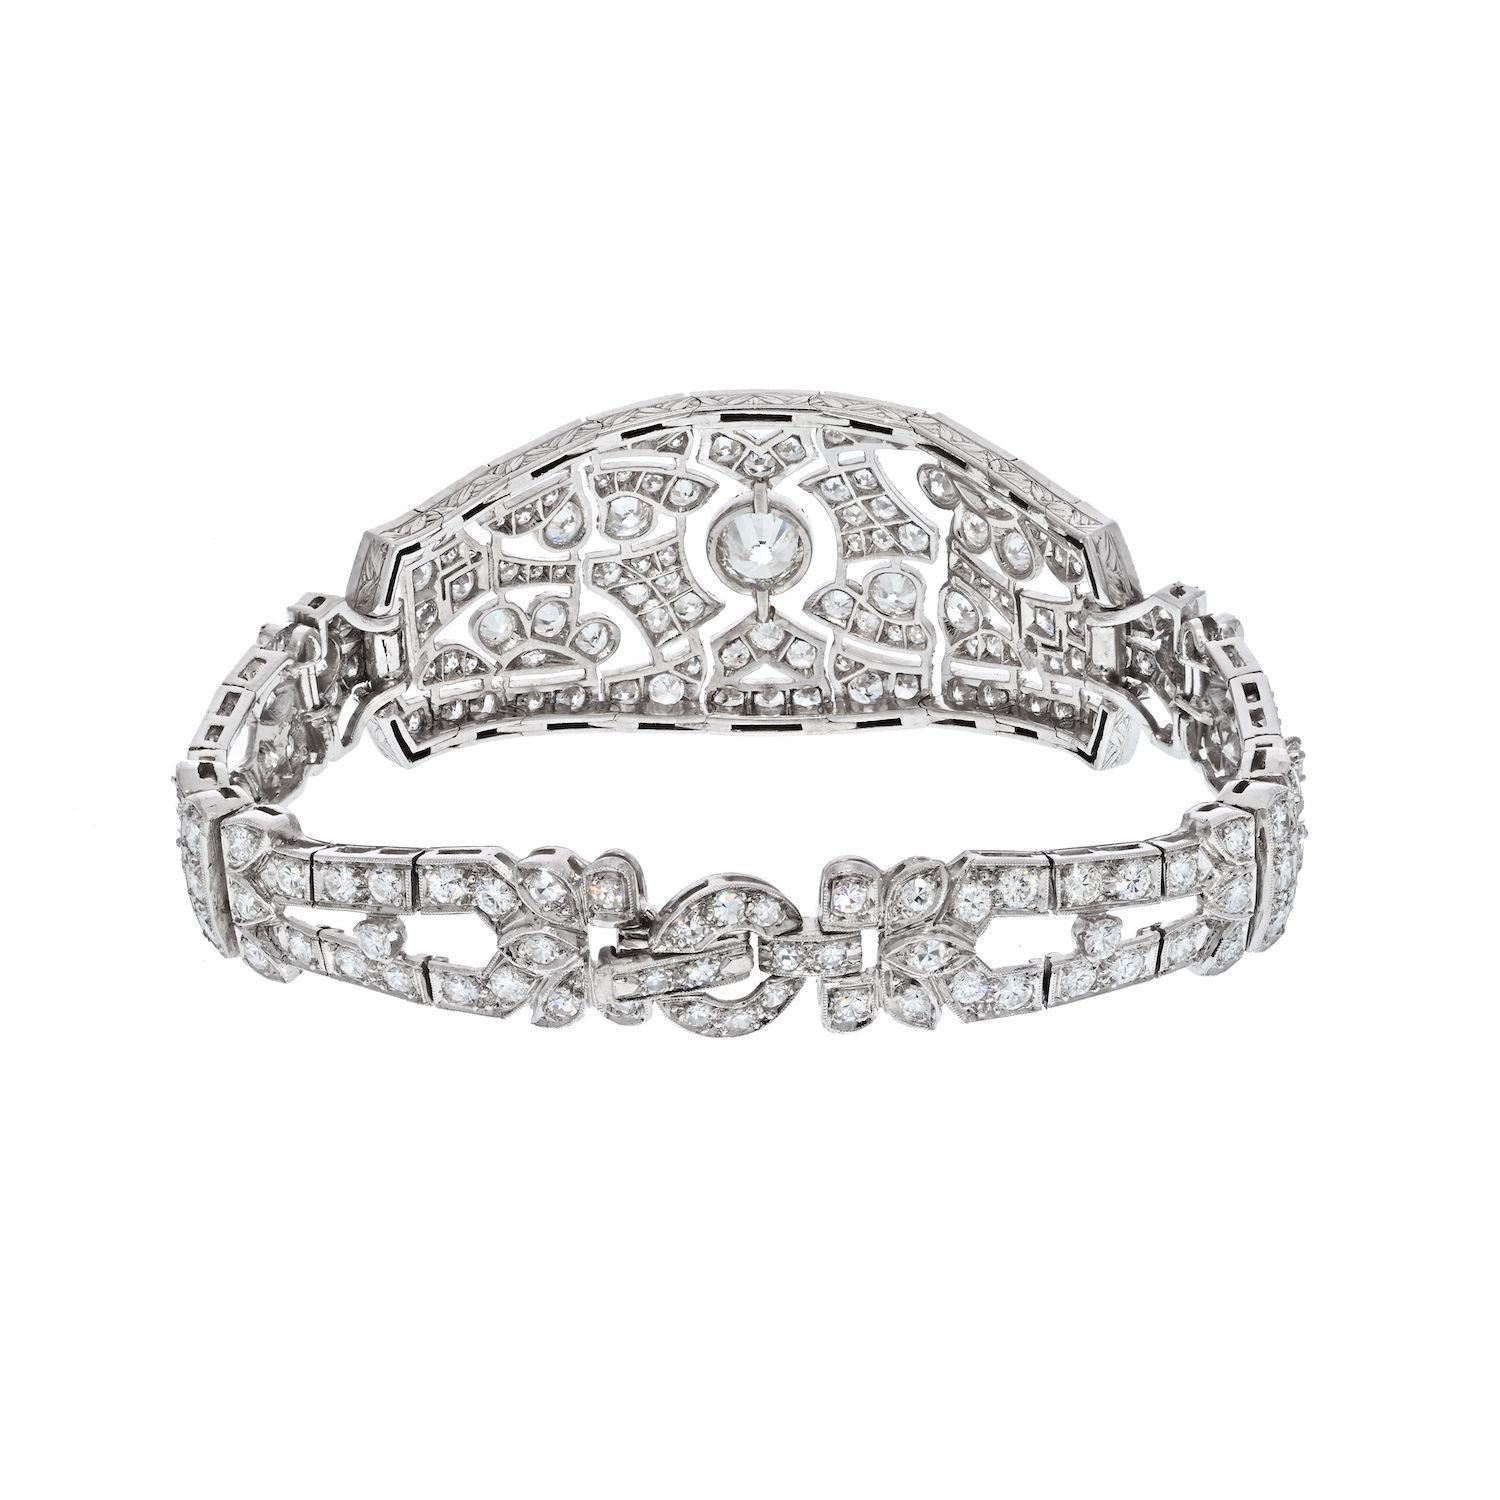 12.00 Carat Art Deco Openwork Diamond Bracelet in Platinum In Excellent Condition For Sale In New York, NY